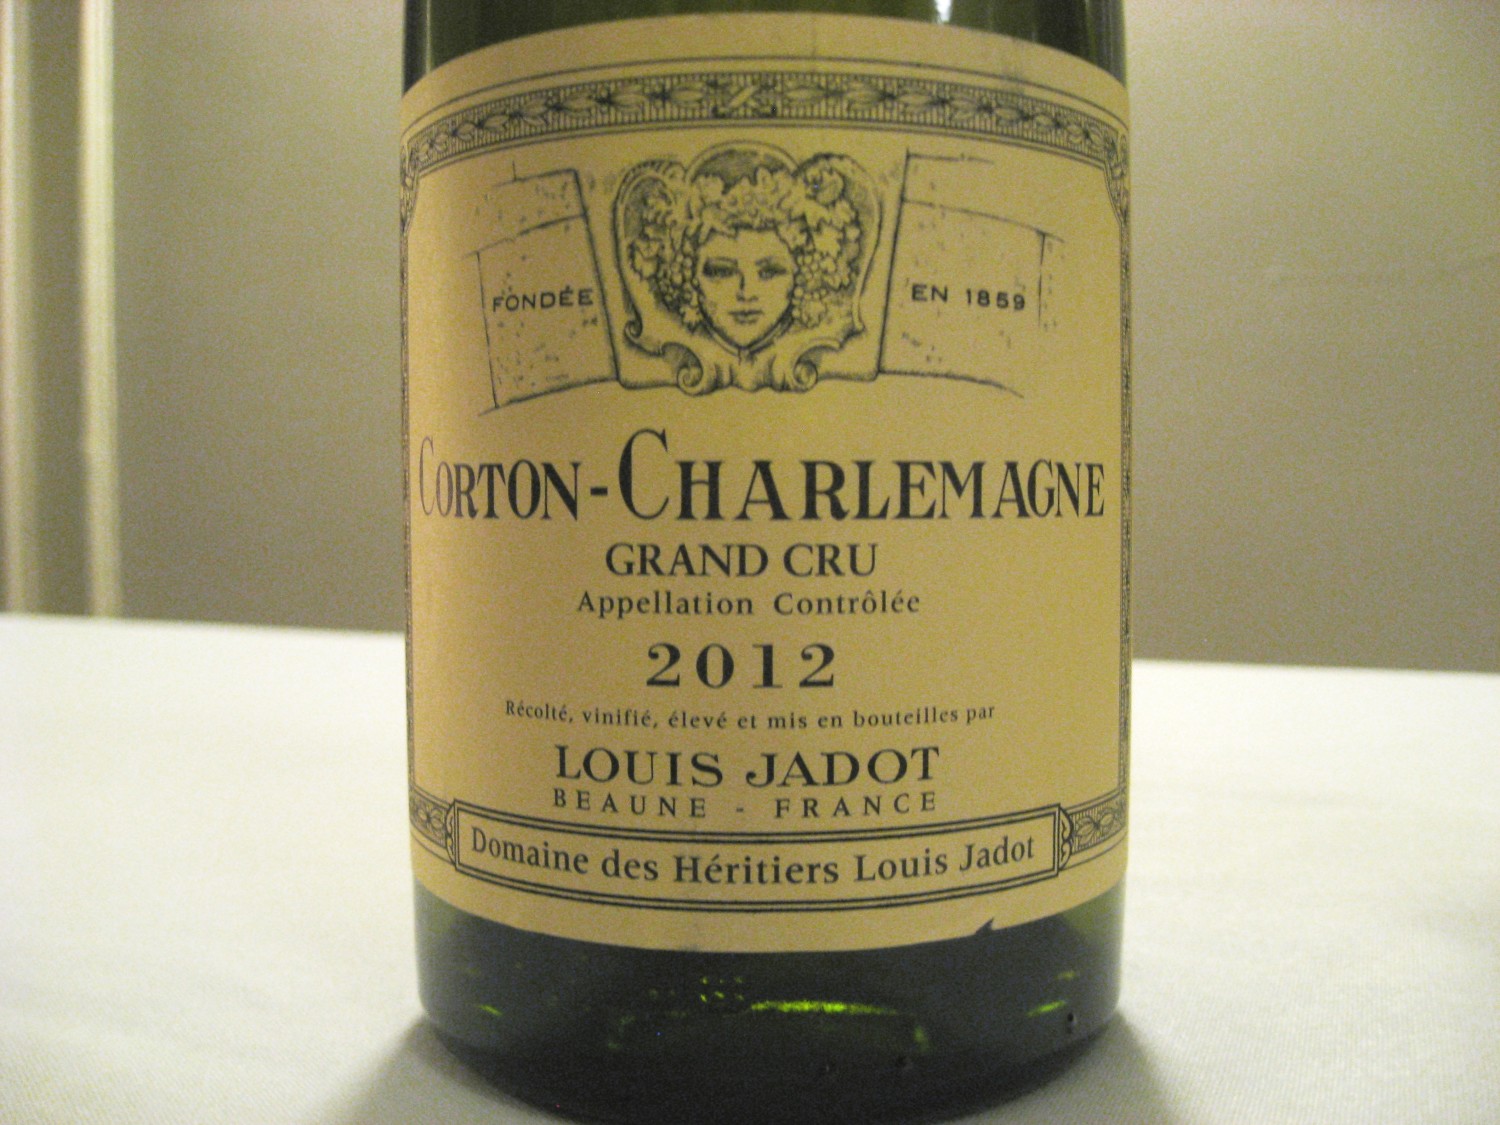 Domaine des Héritiers Louis Jadot, Corton-Charlemagne Grand Cru 2012, Beaune, France, Wine Casual